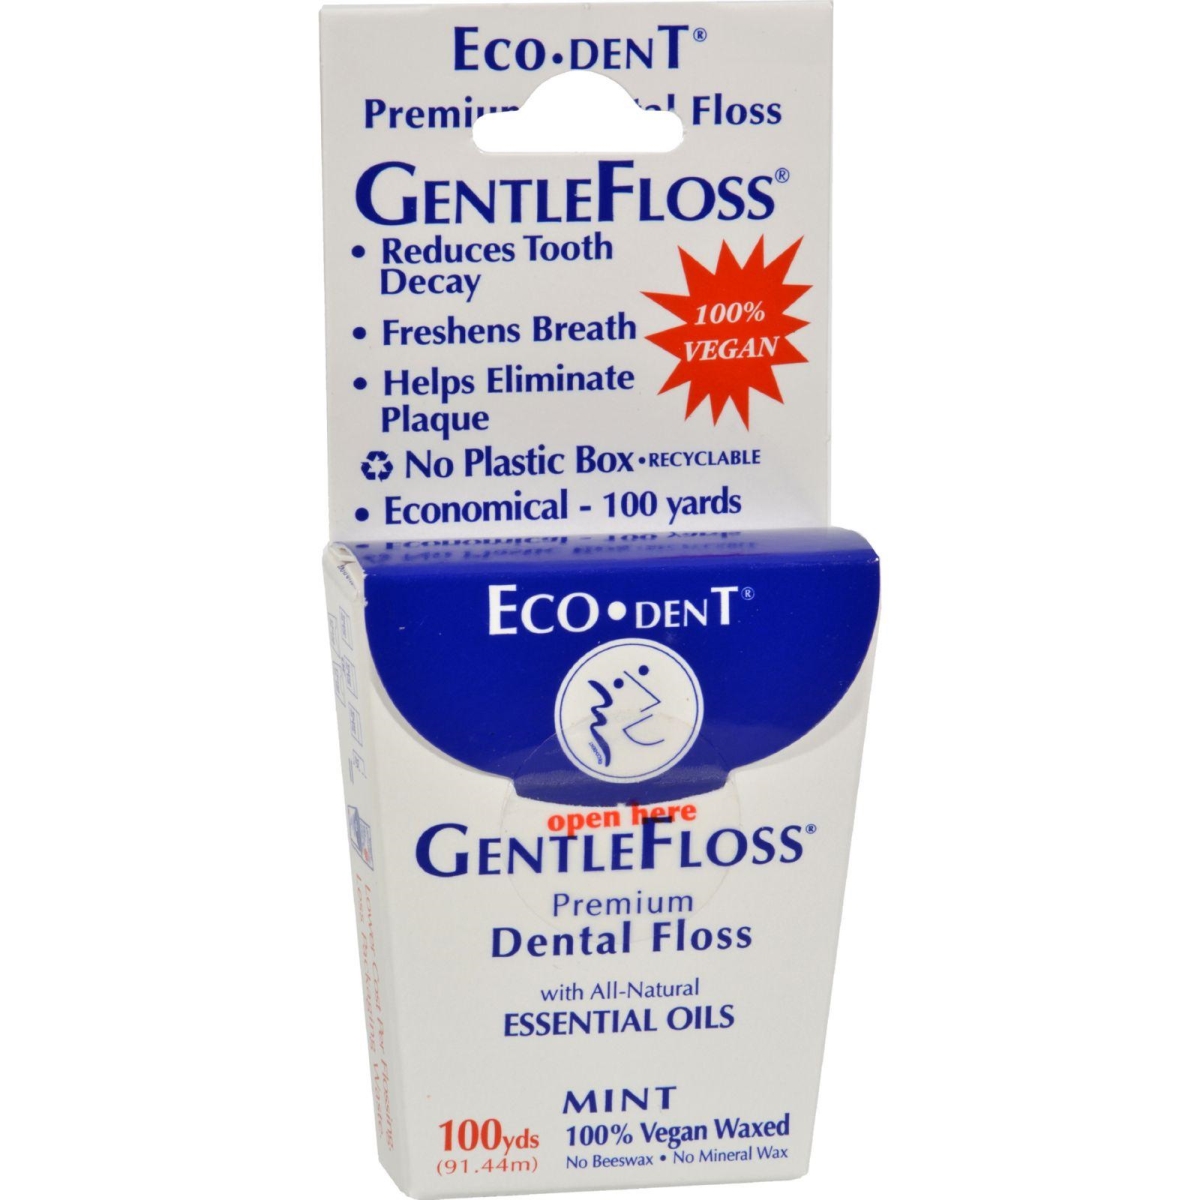 Hg0352849 Gentlefloss Premium Dental Floss Mint - 100 Yard, Case Of 6